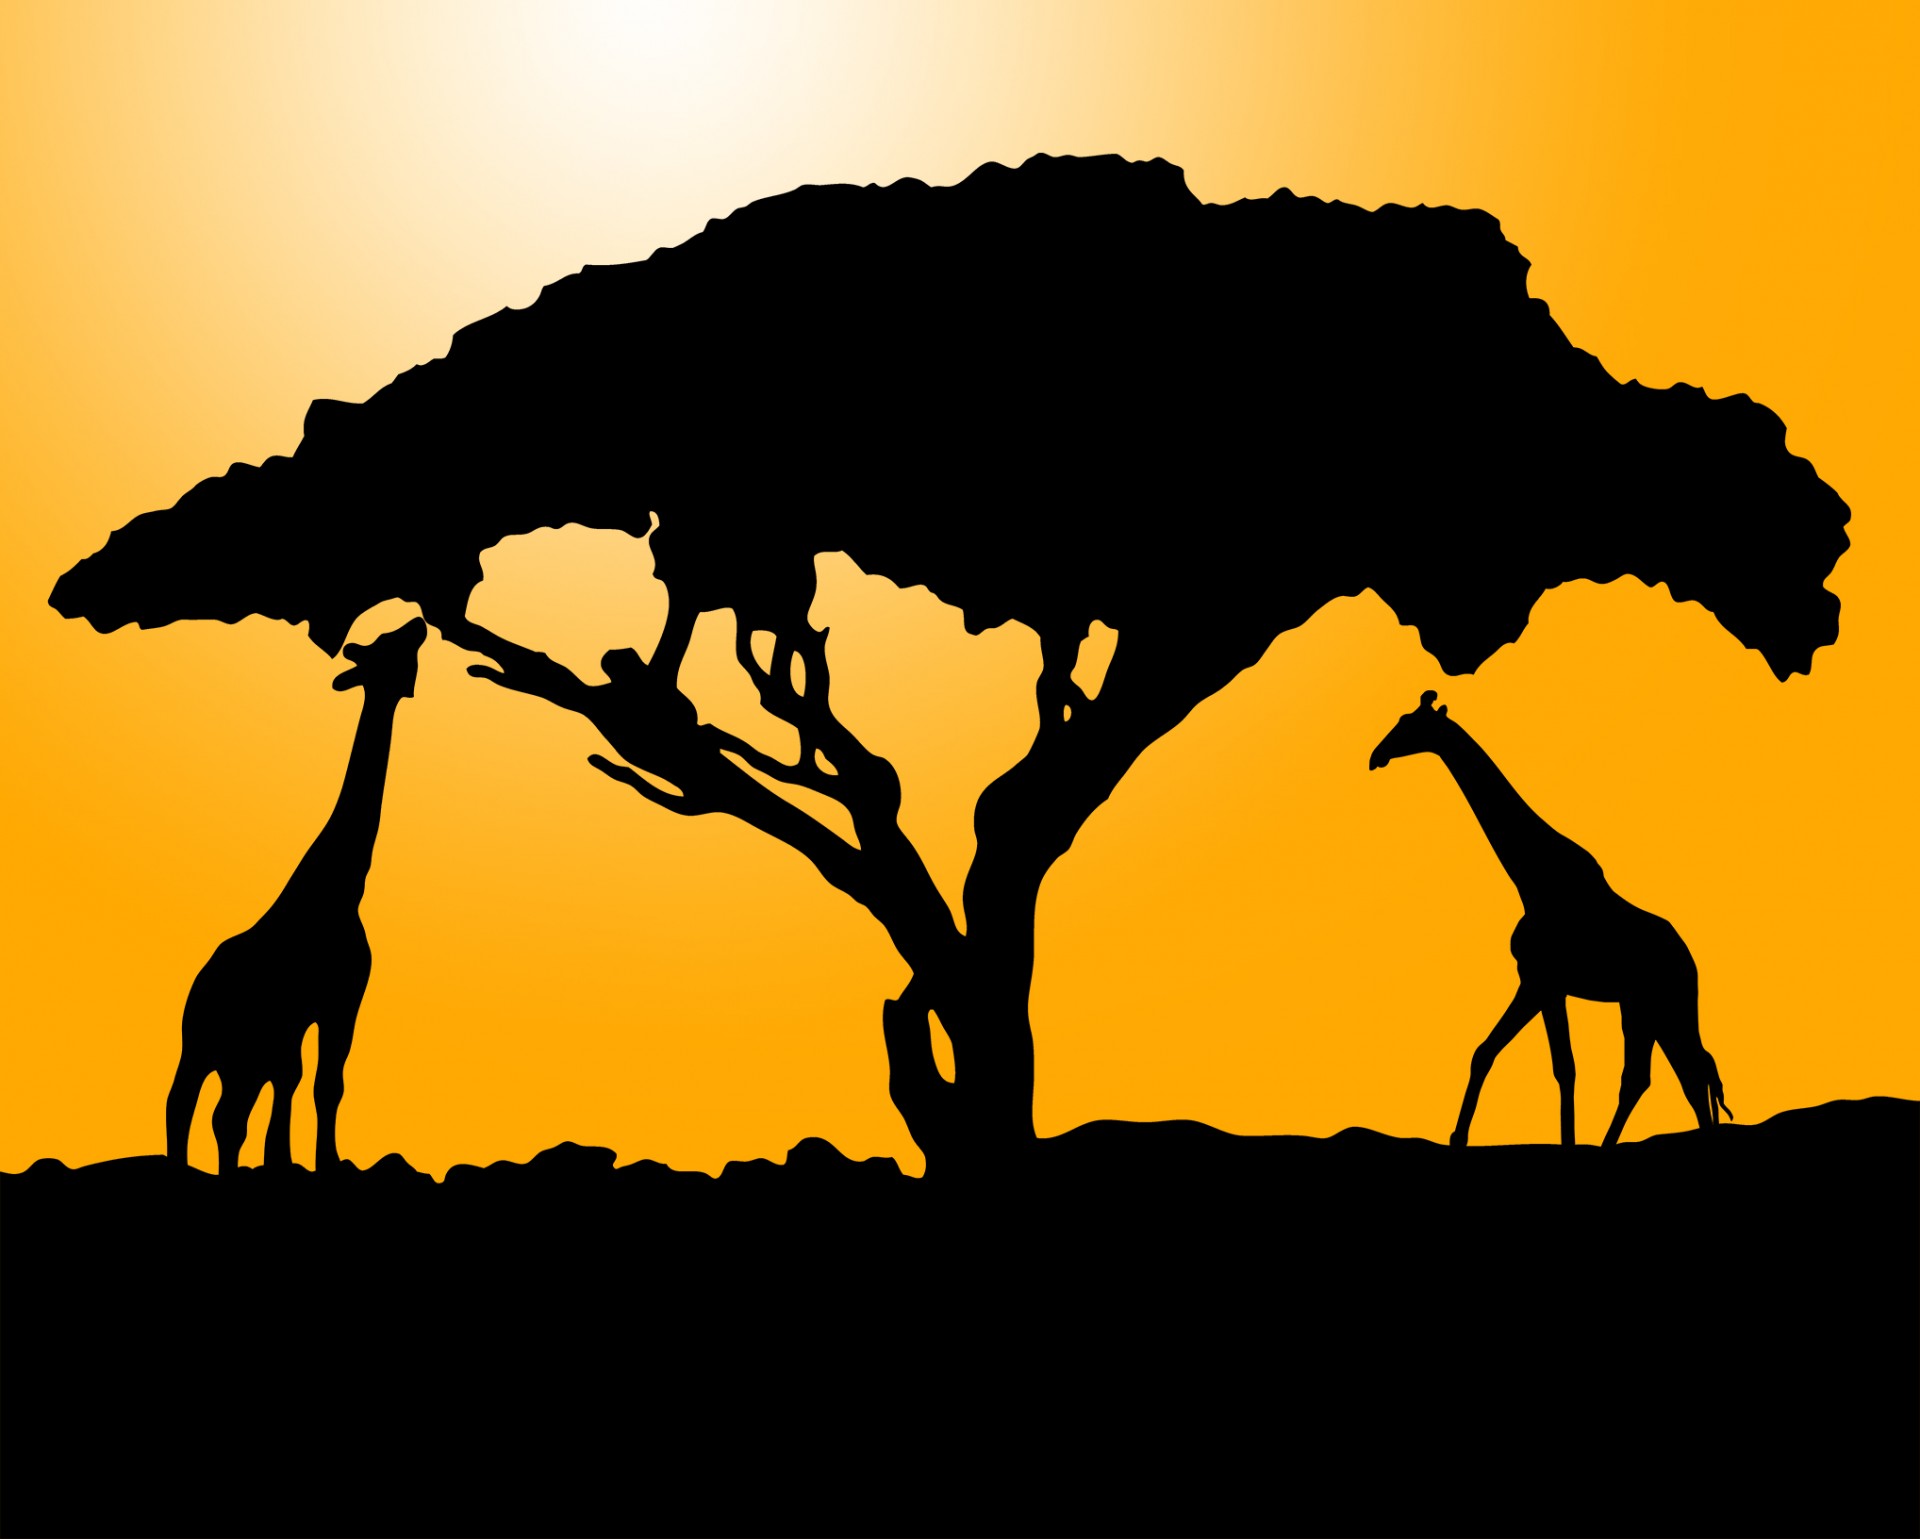 Two giraffes in black silhouette at sunrise or sunset illustration